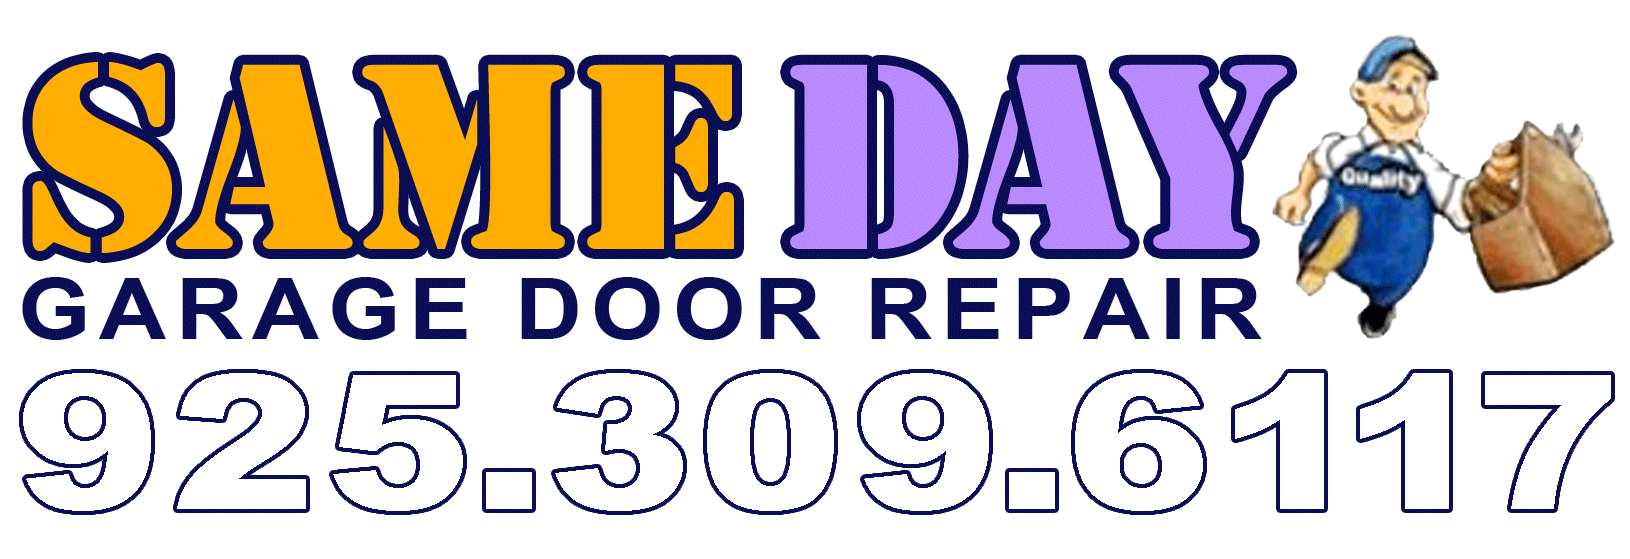 same day garage door repair logo